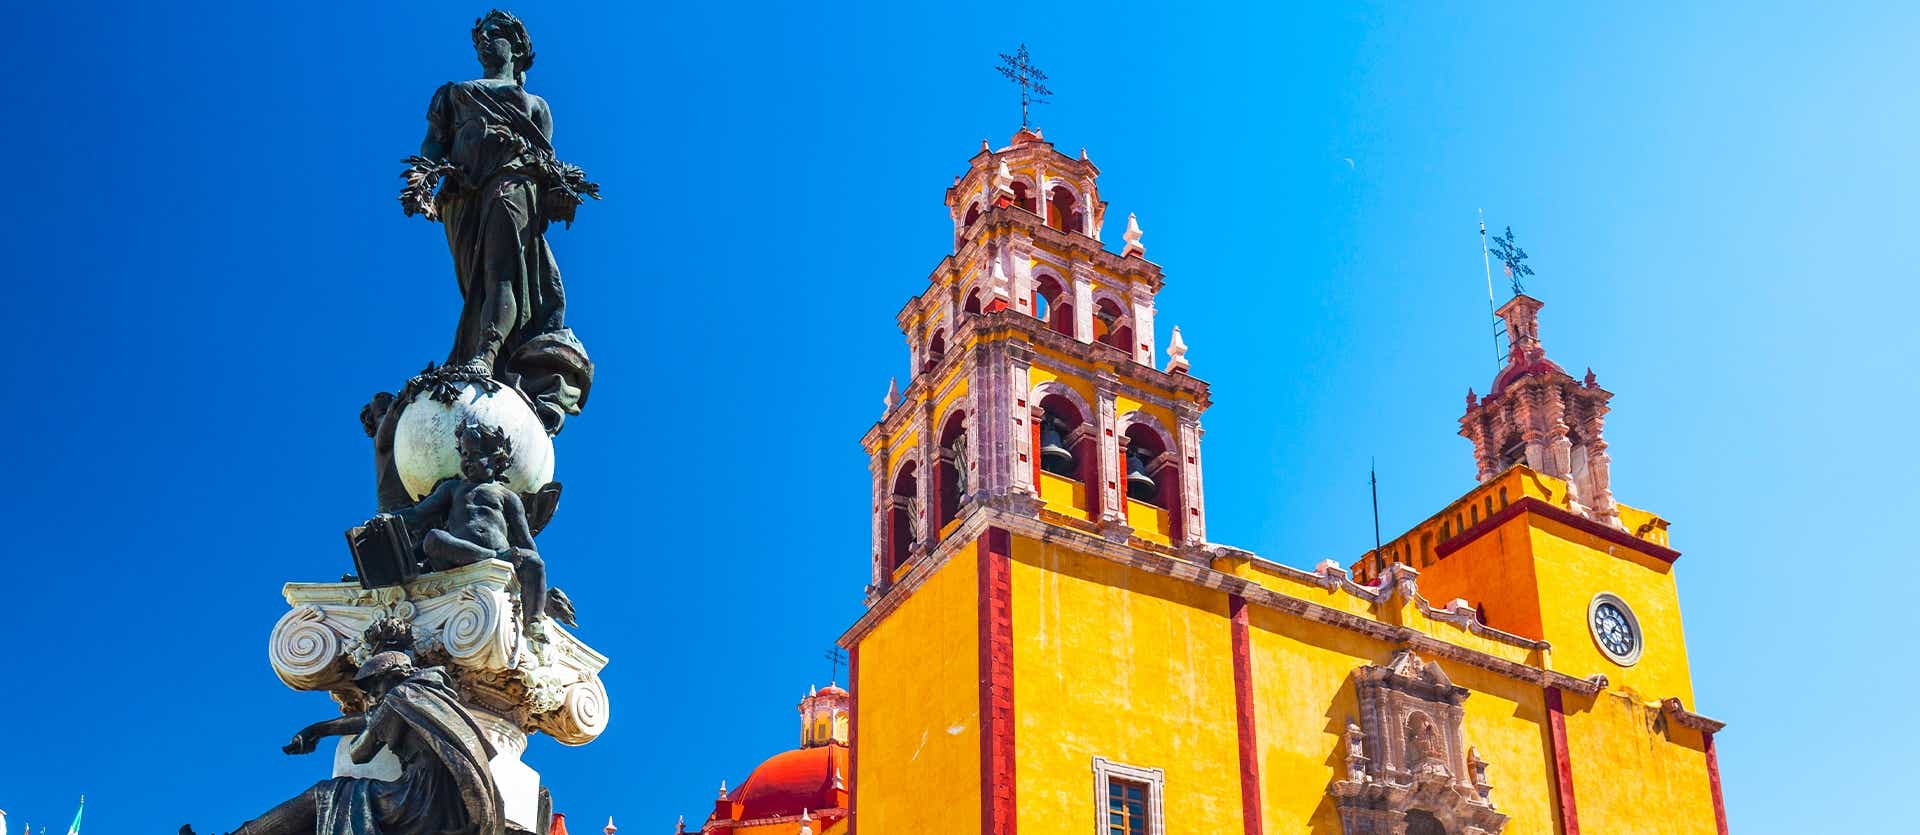 Basilique de Notre-Dame de Guanajuato <span class="iconos separador"></span> Guanajuato